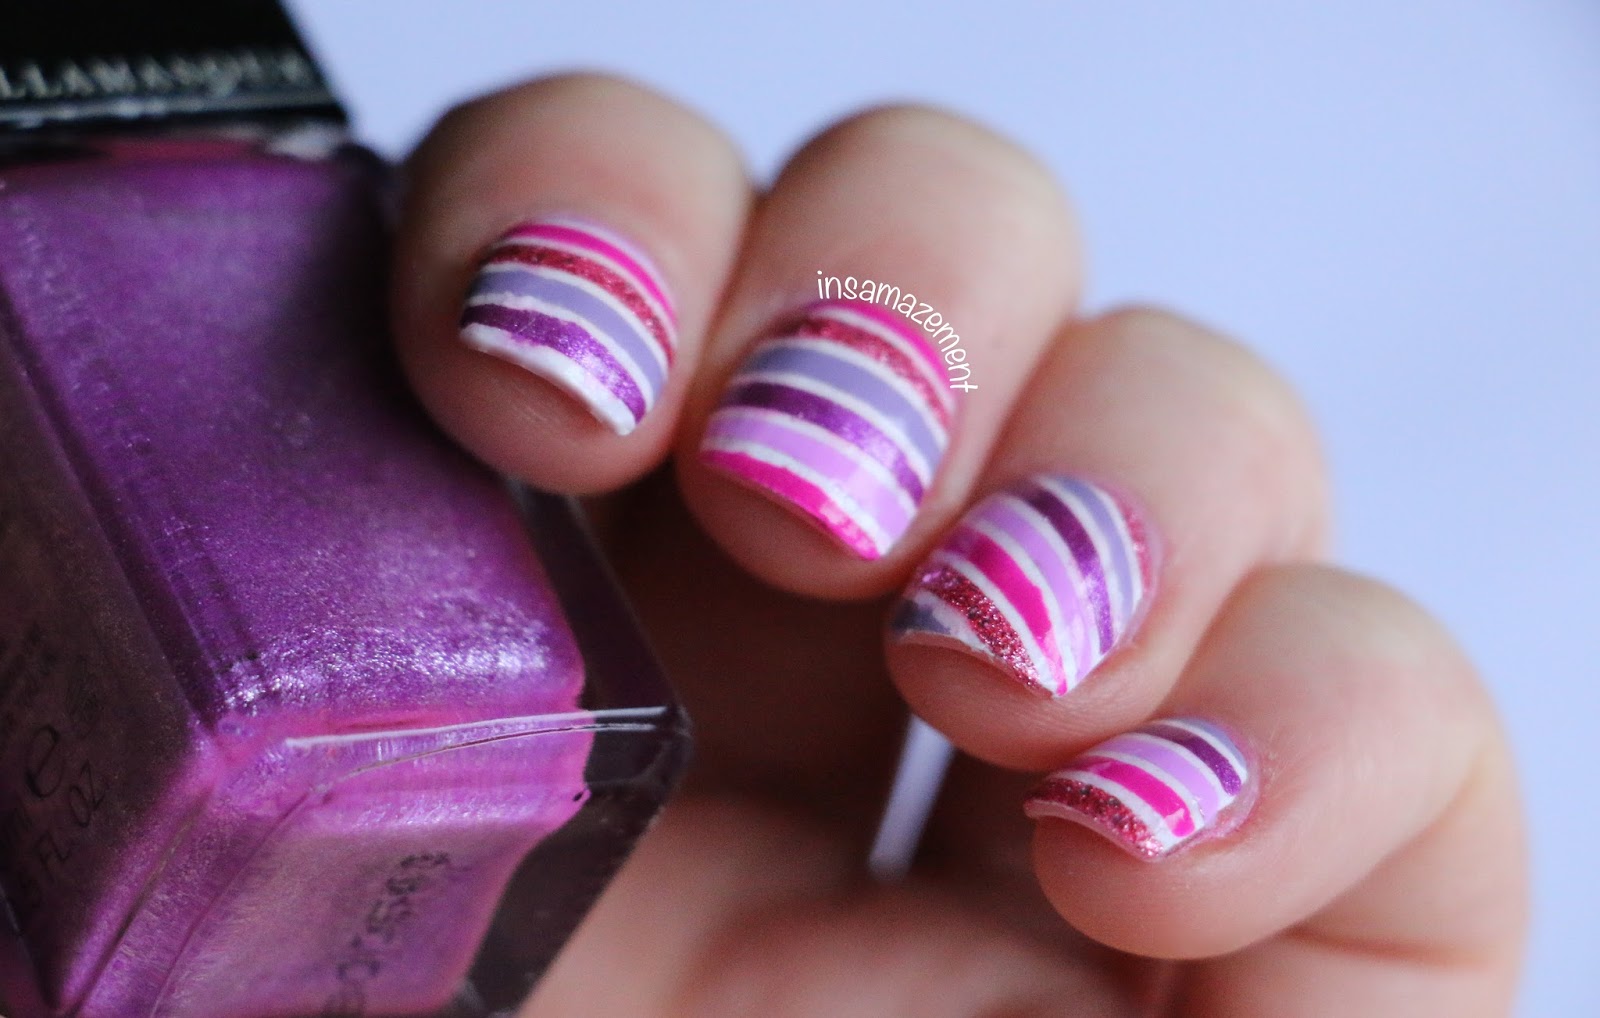 nail art design pink and purple